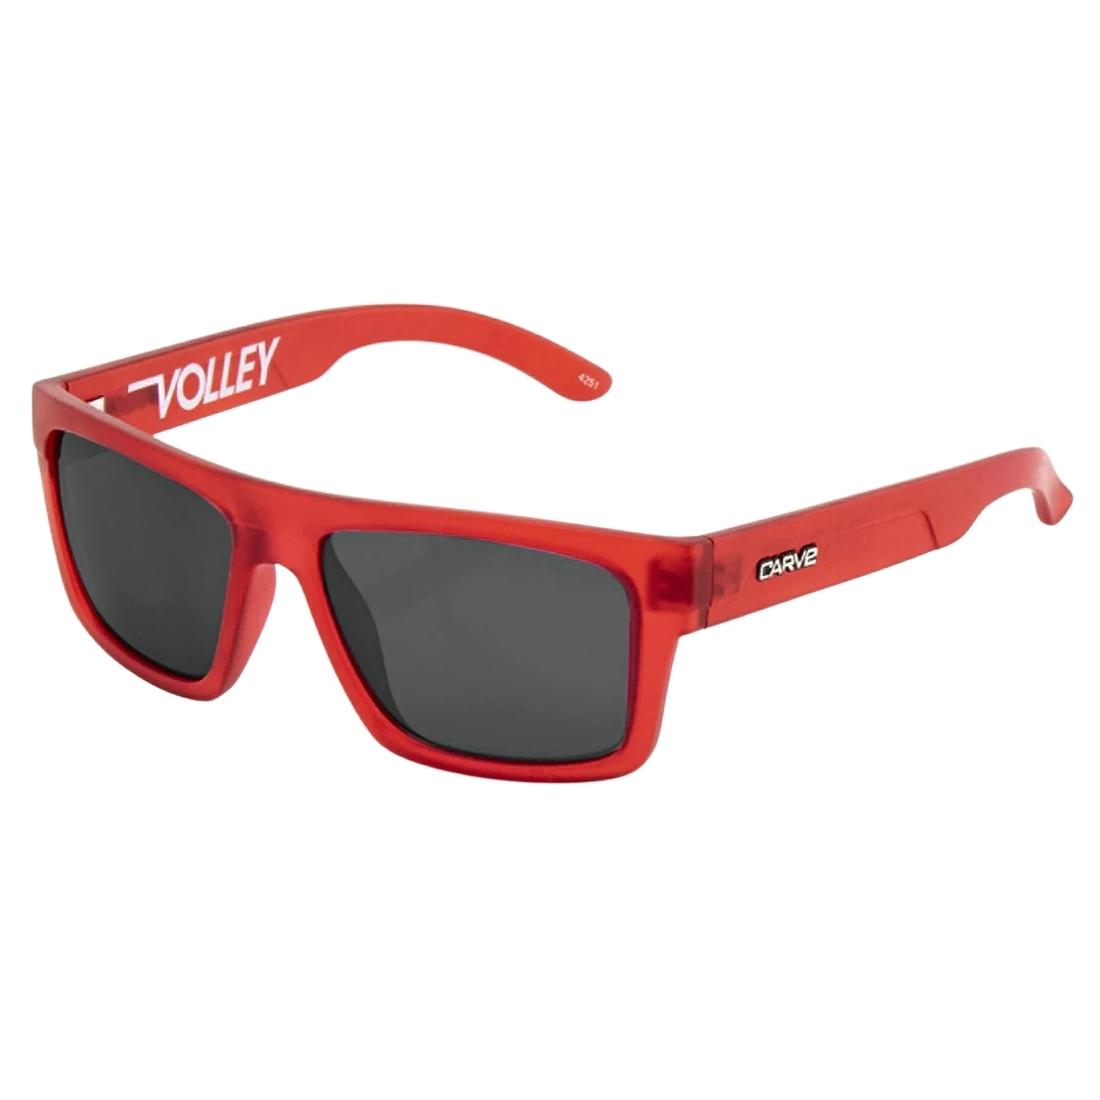 Carve Volley JR Kids Sunglasses - Red Translucent - Kids Sunglasses by Carve